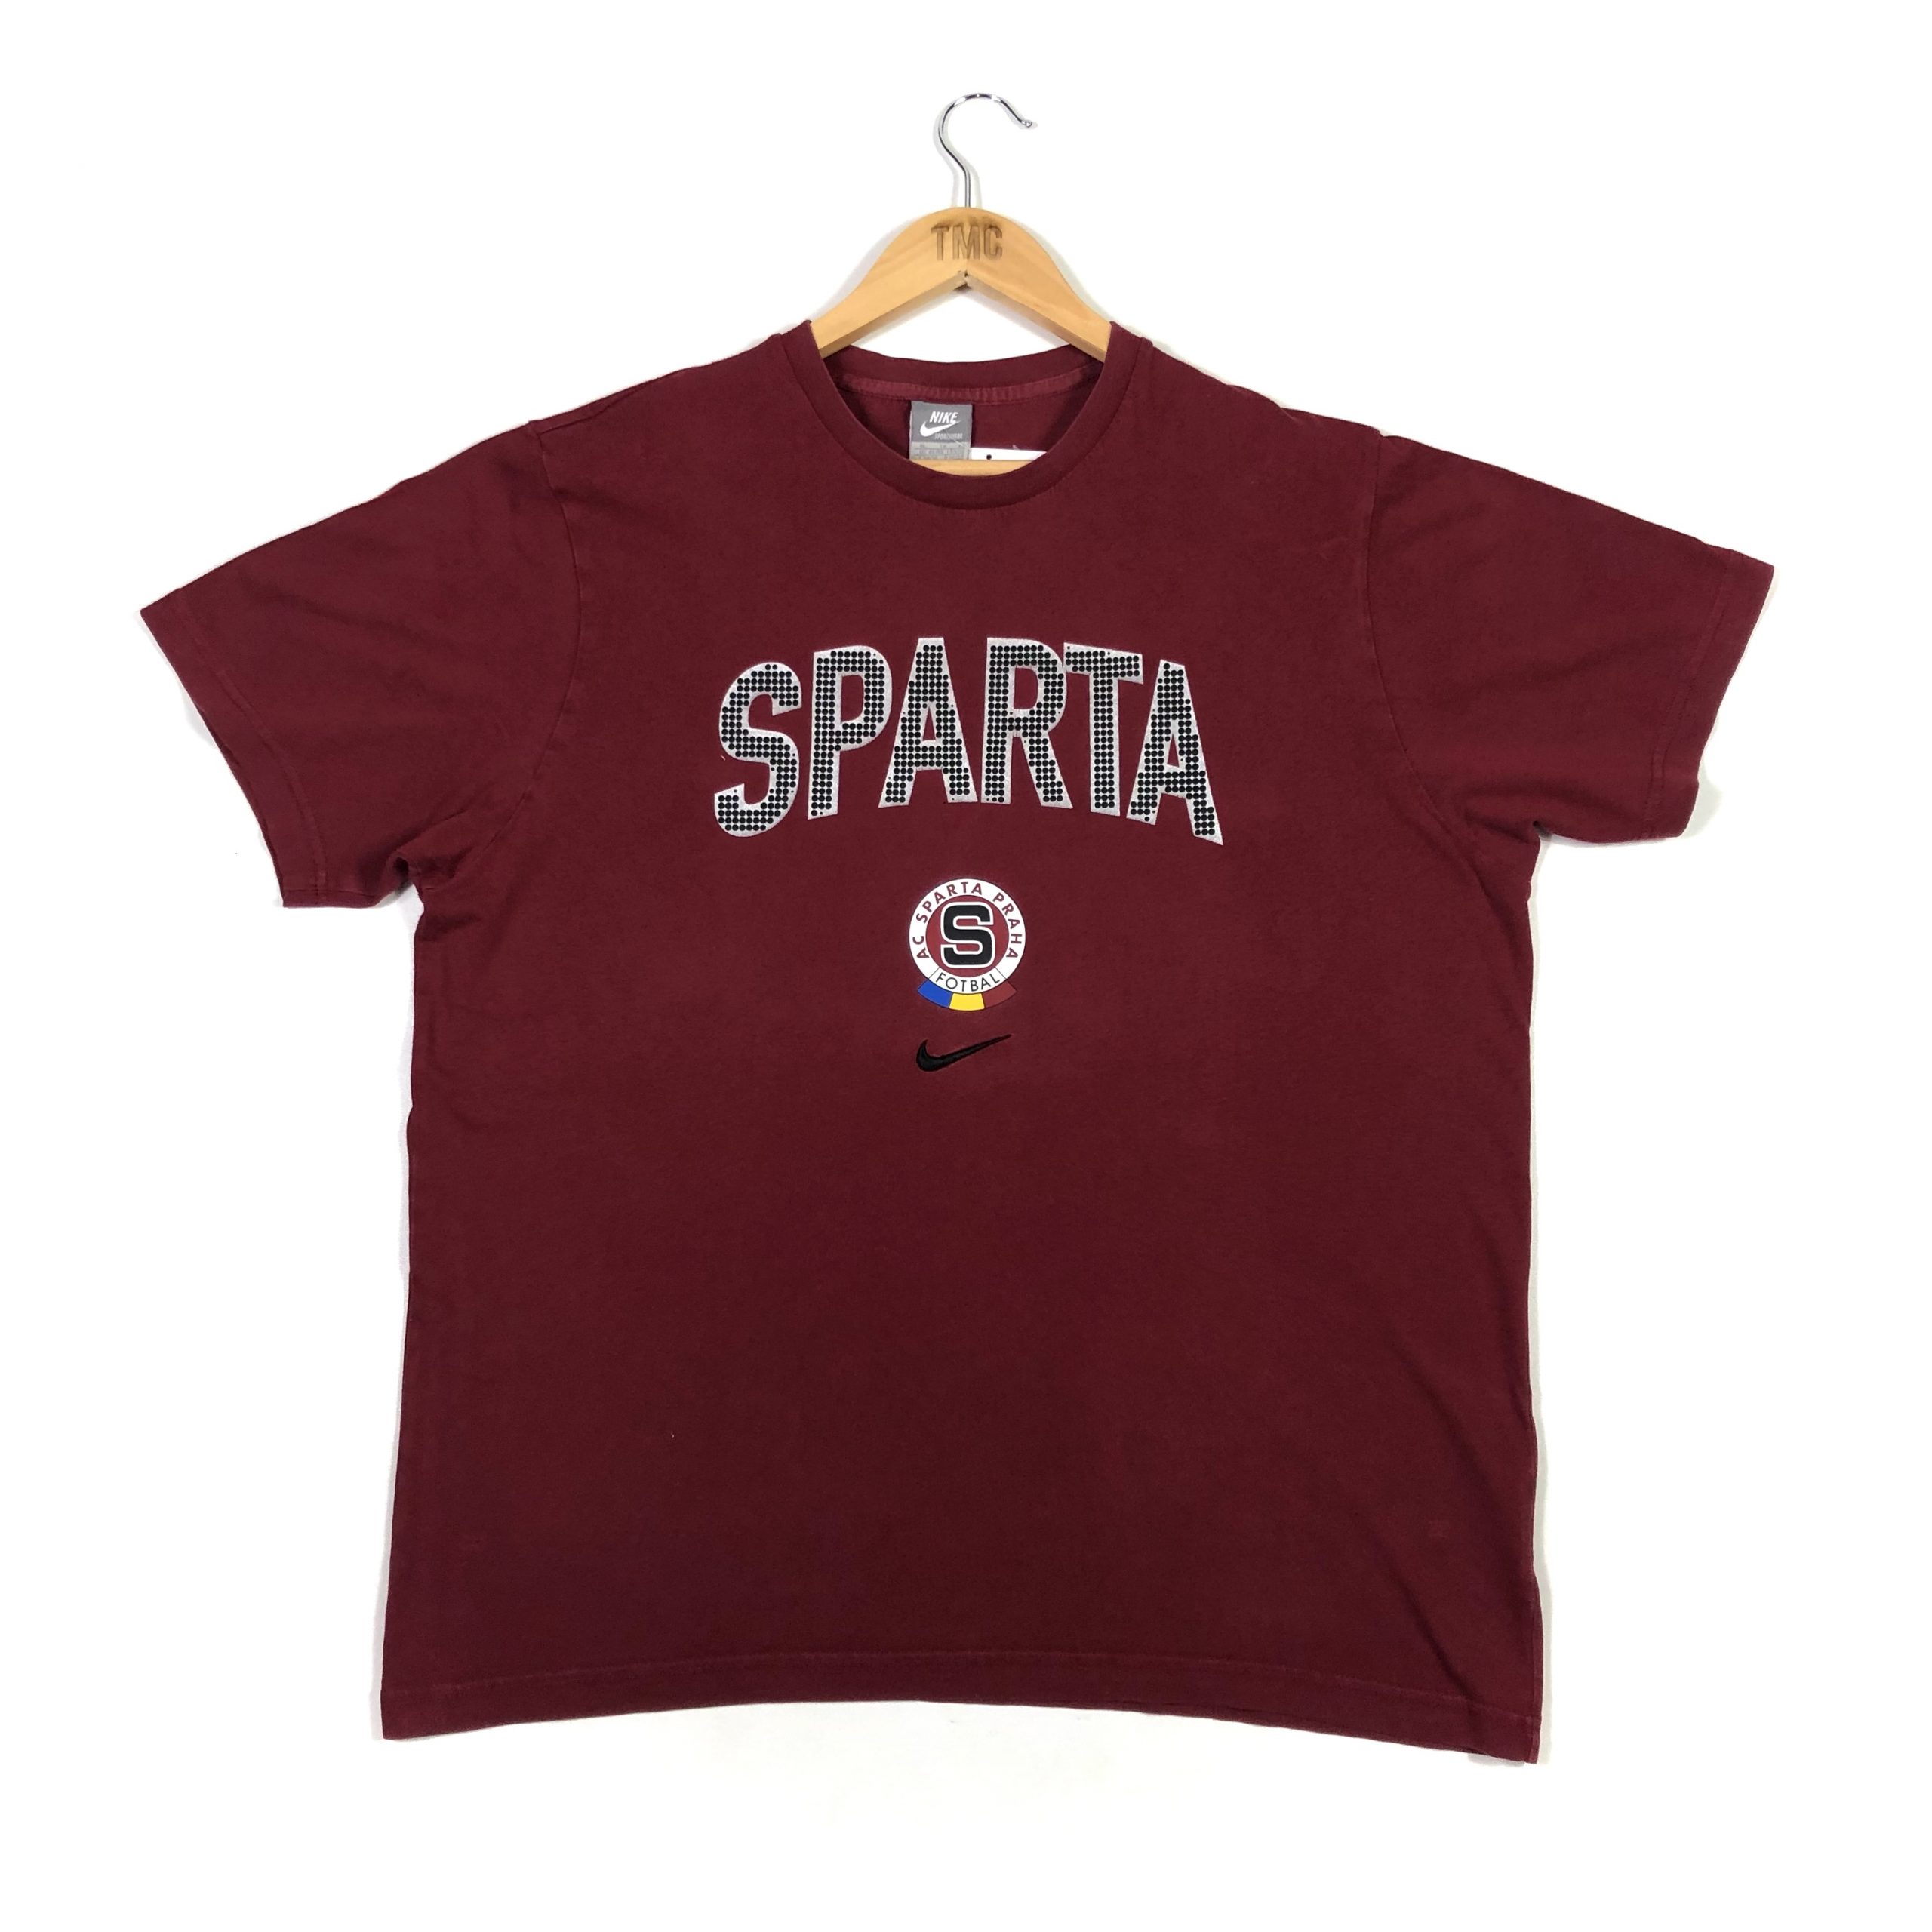 Nike AC Sparta Praha Spell Out T-Shirt - Burgundy - XL - TMC Vintage ...